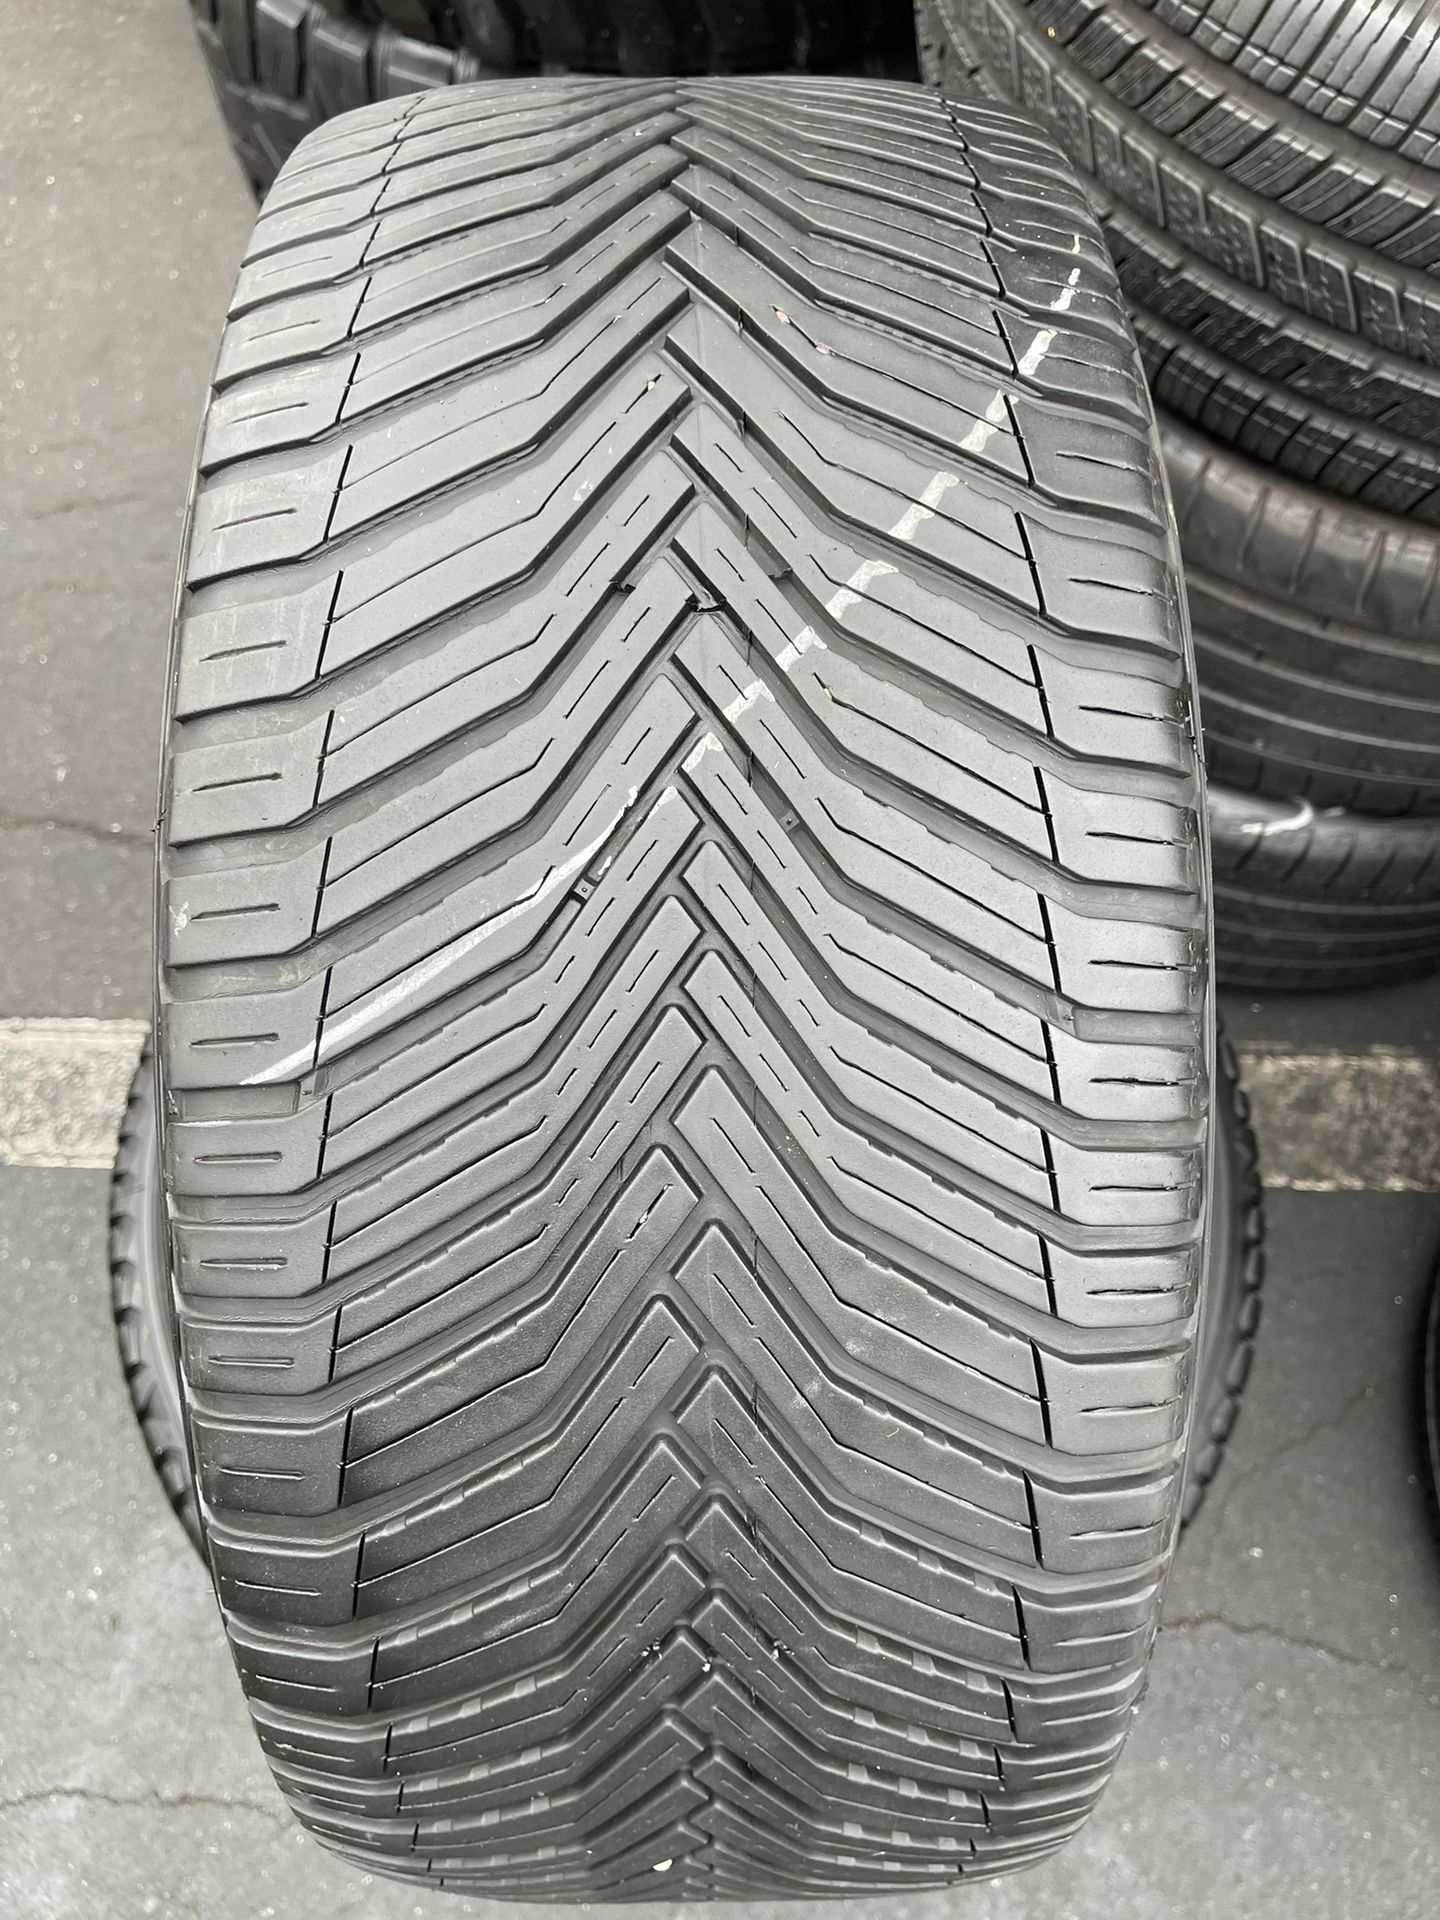 235/40/19 Michelin Tires 